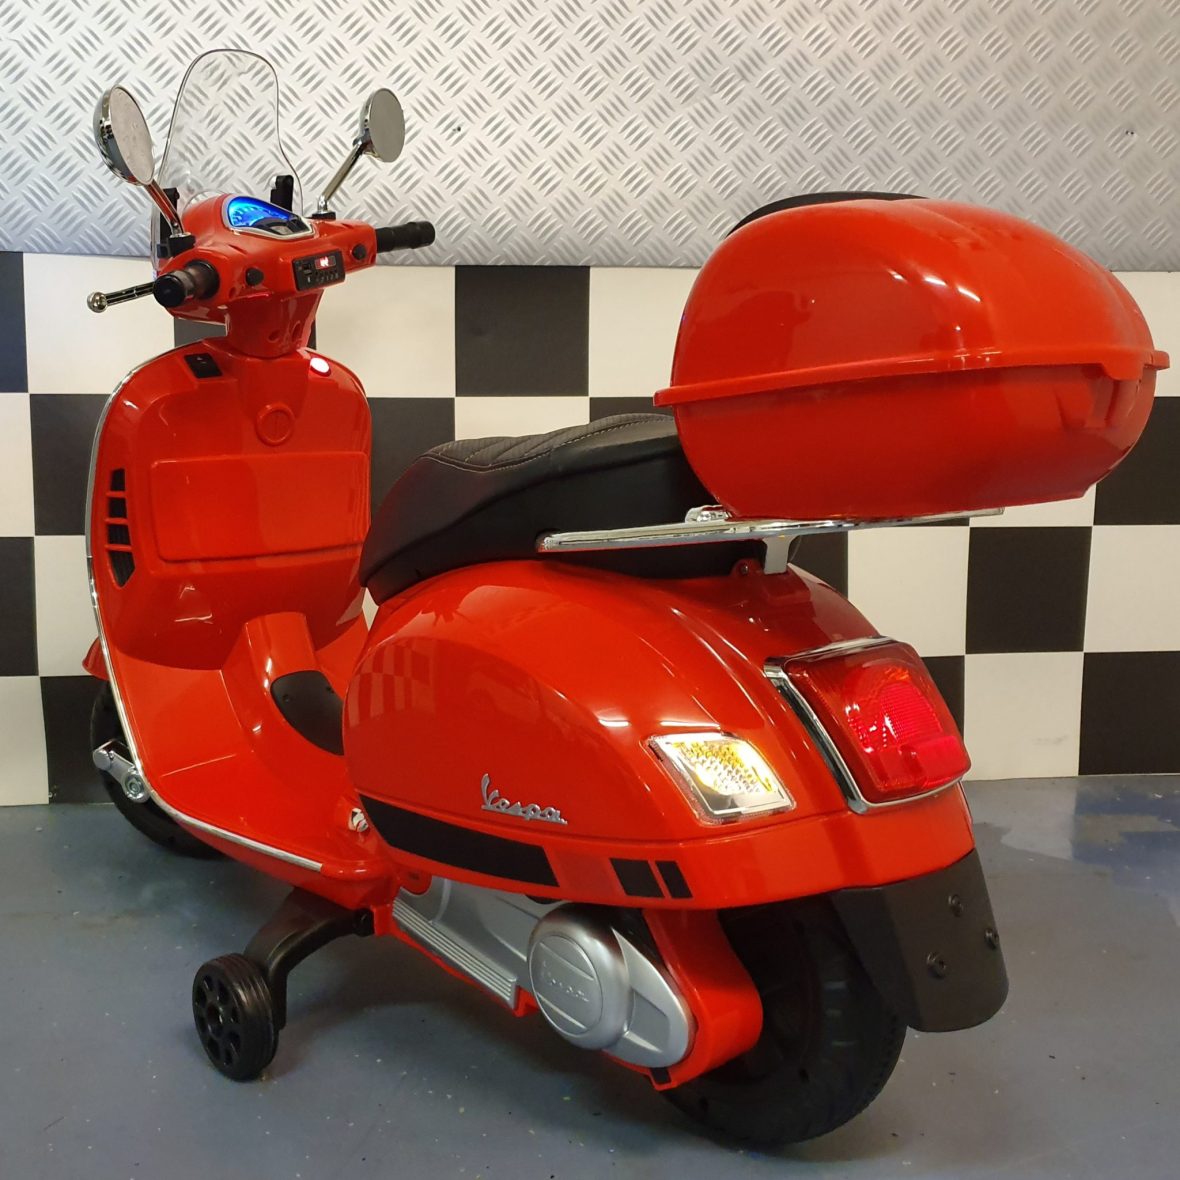 Vespa-accu-kinderscooter